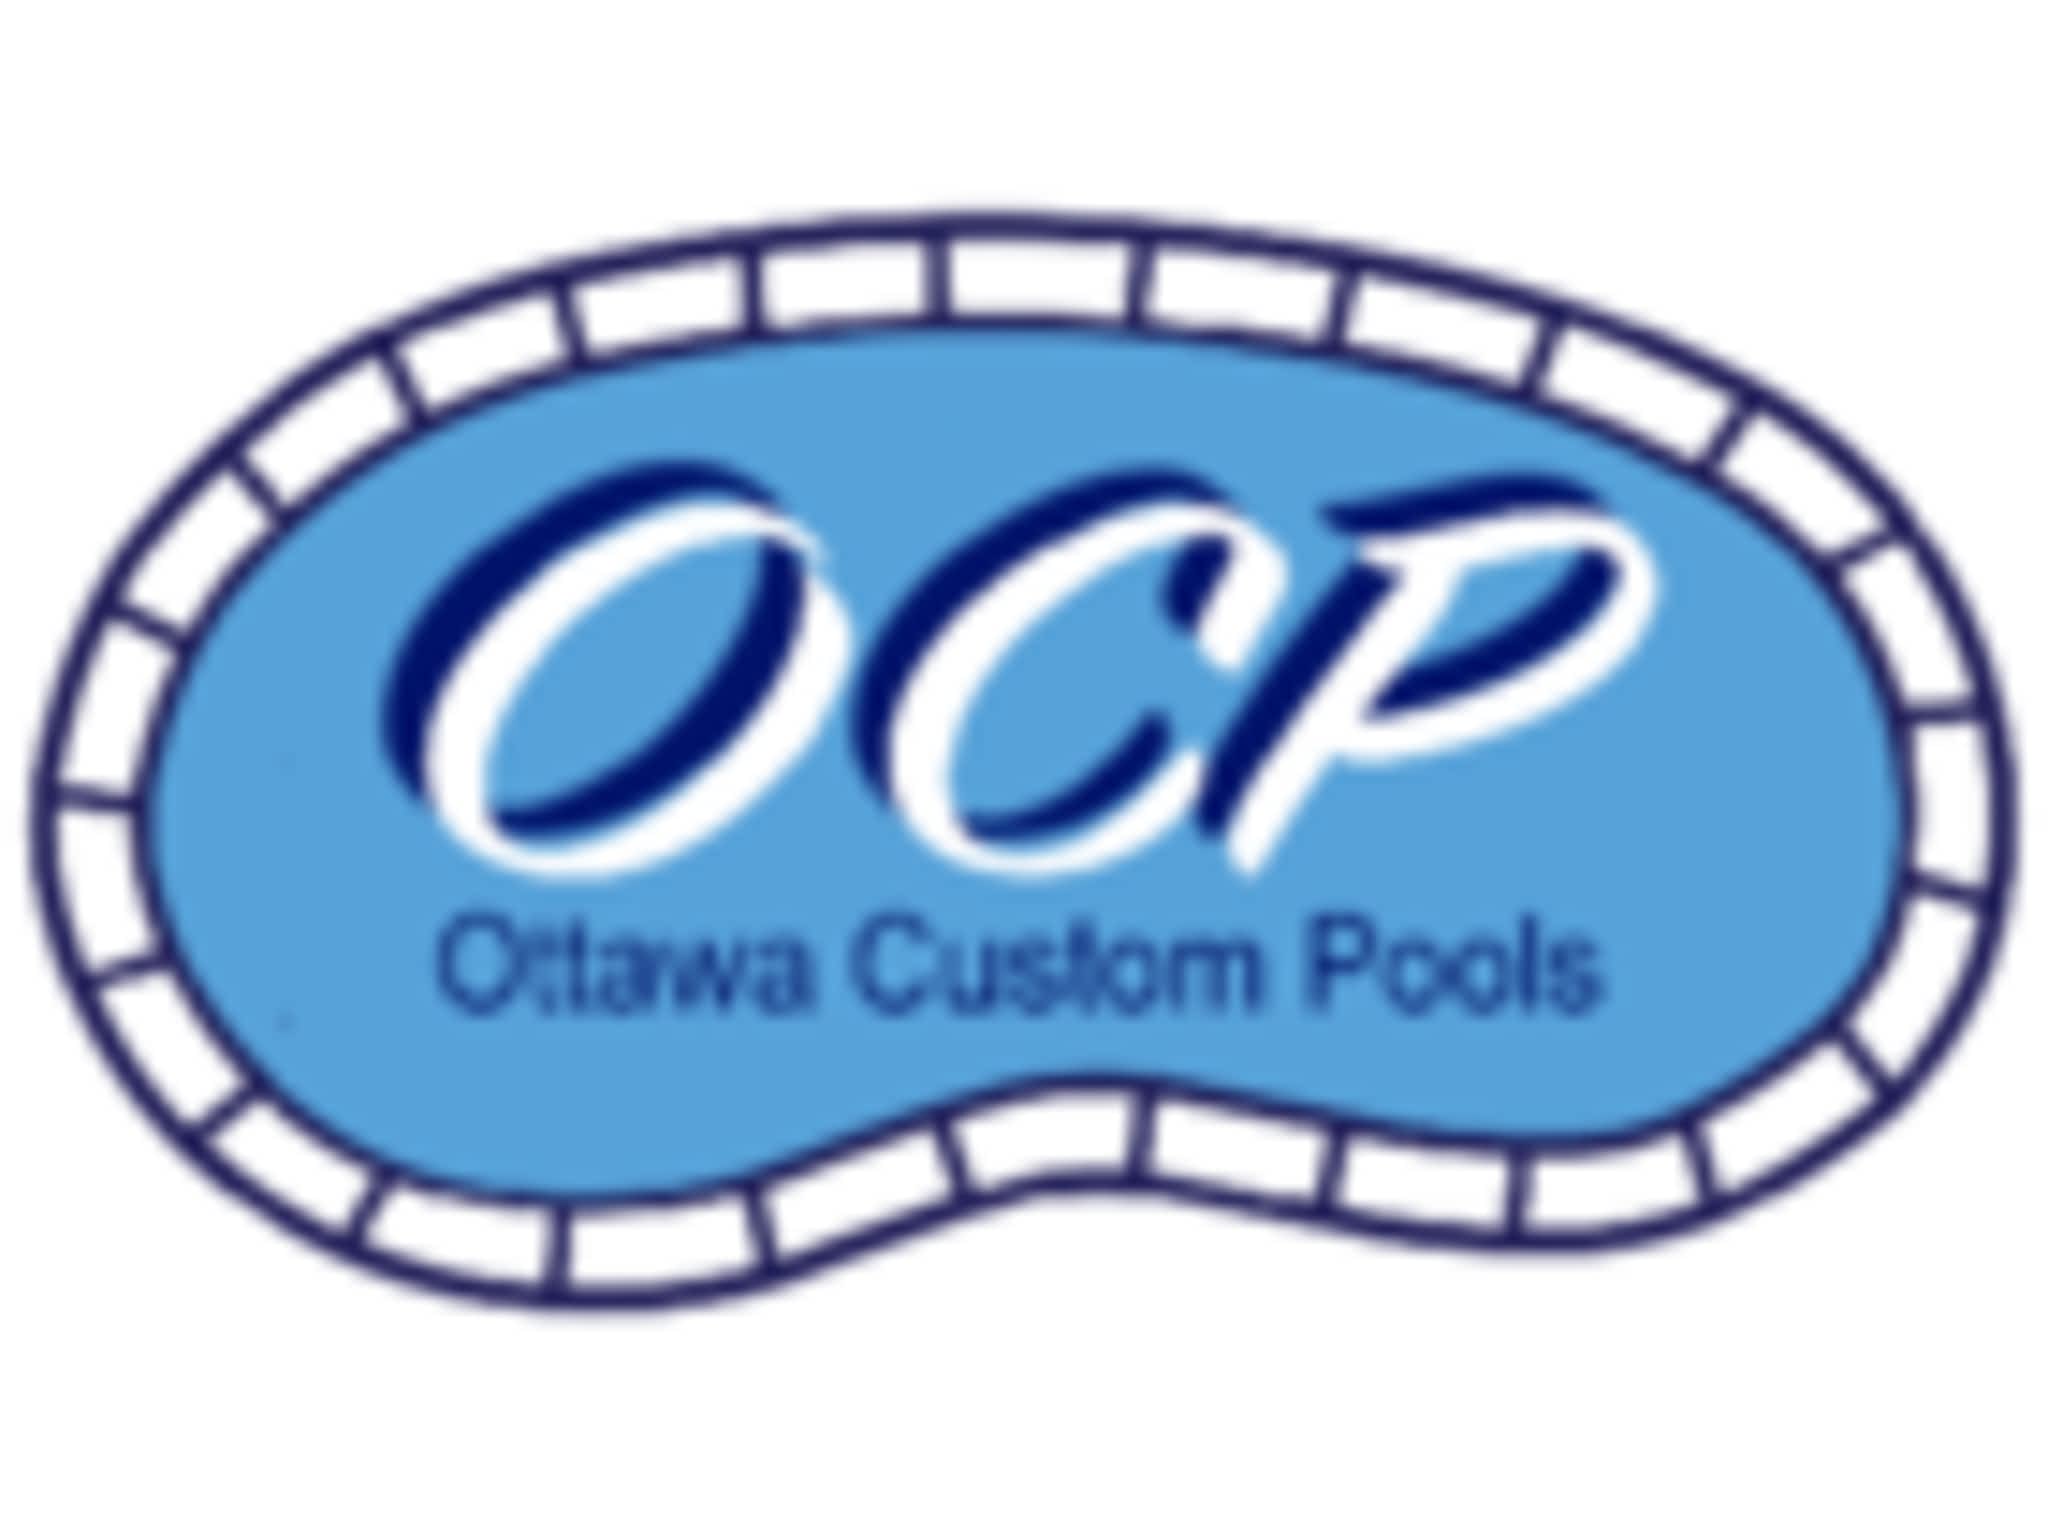 photo Ottawa Custom Pools